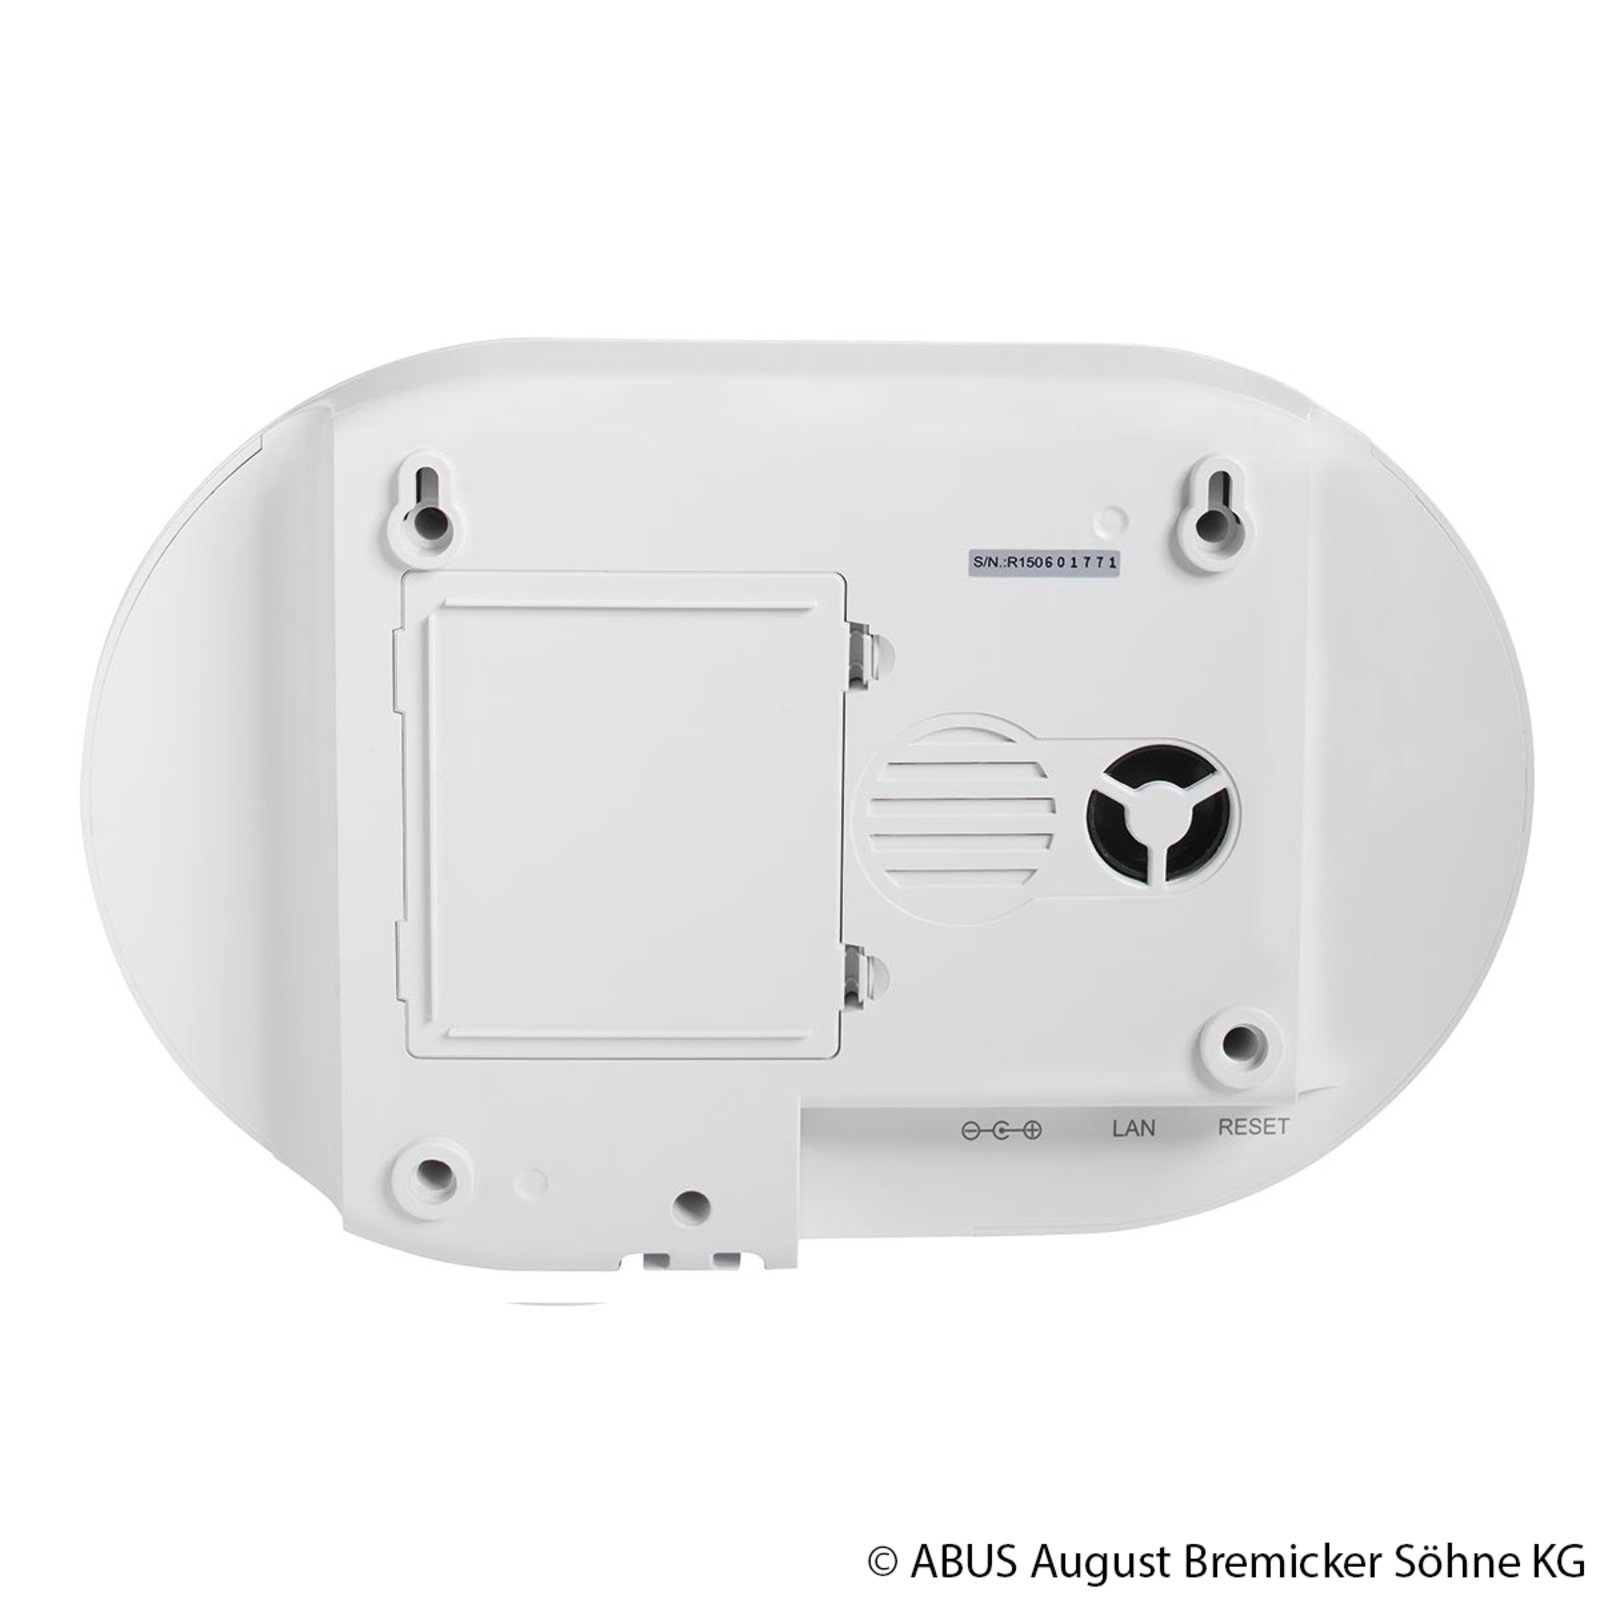 ABUS Smartvest wireless alarm system alarm centre